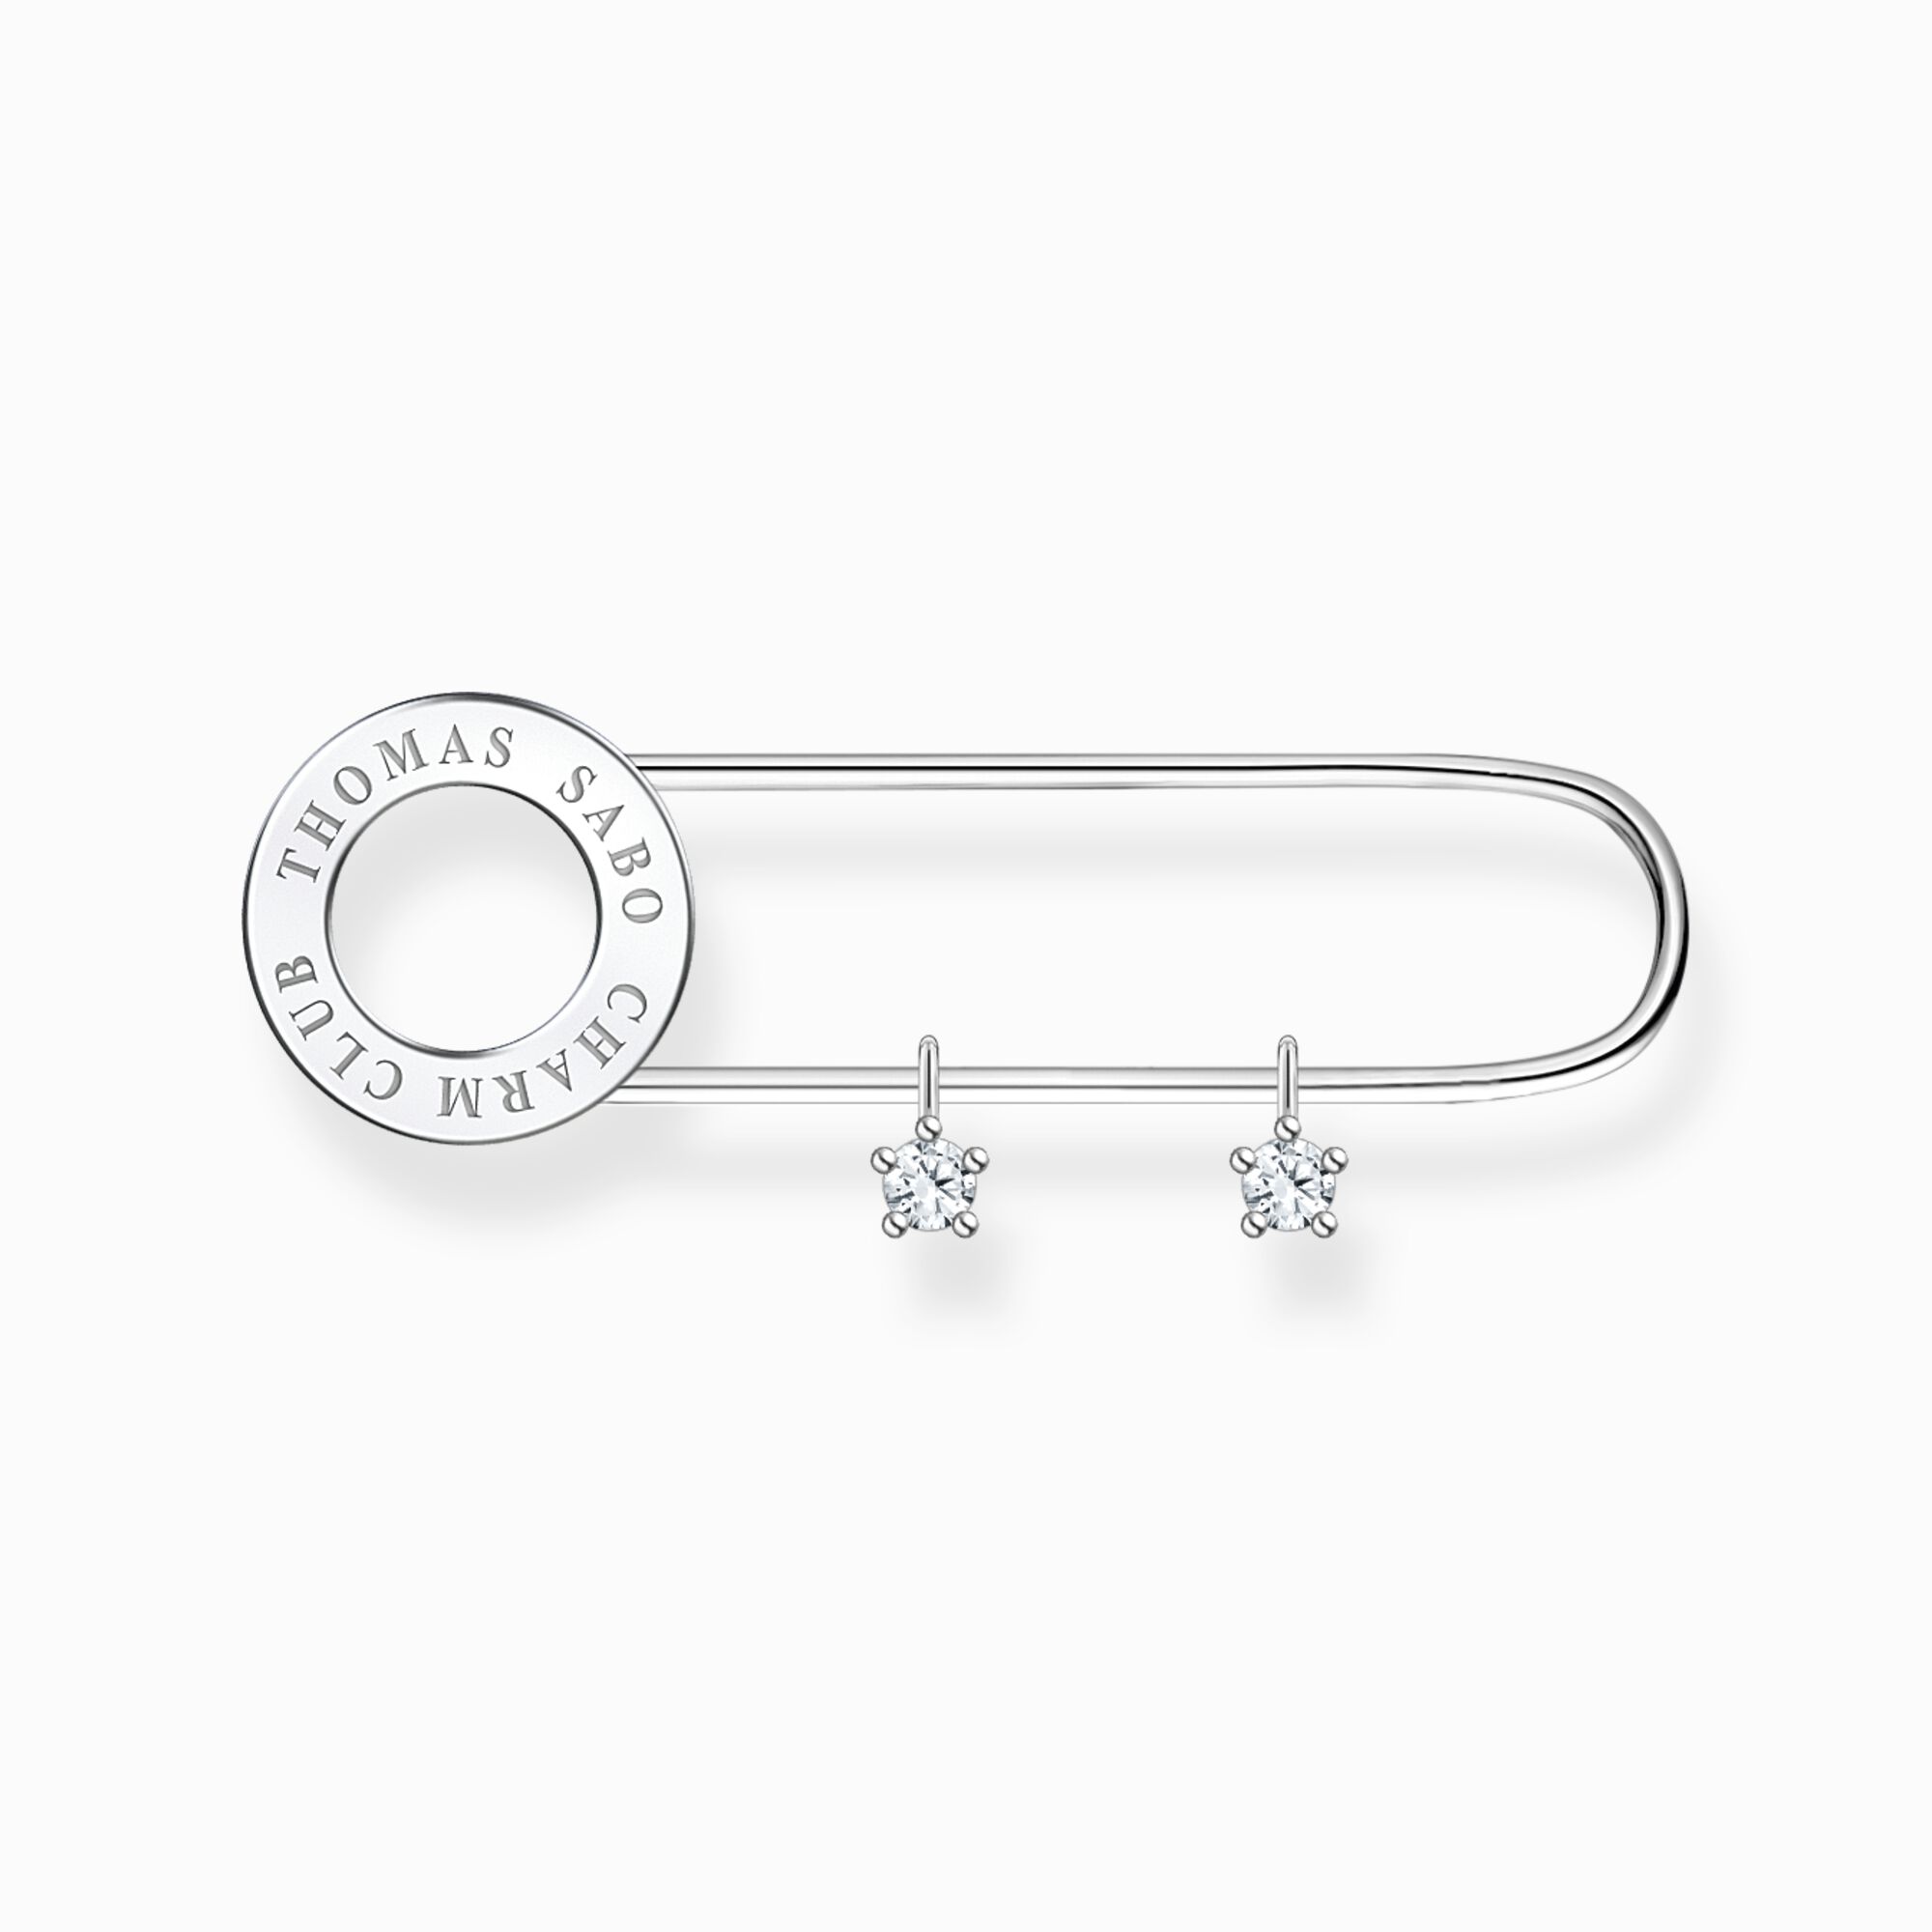 PANDORA 925 925 Safety Pin Brooch Pendant Charm Holder